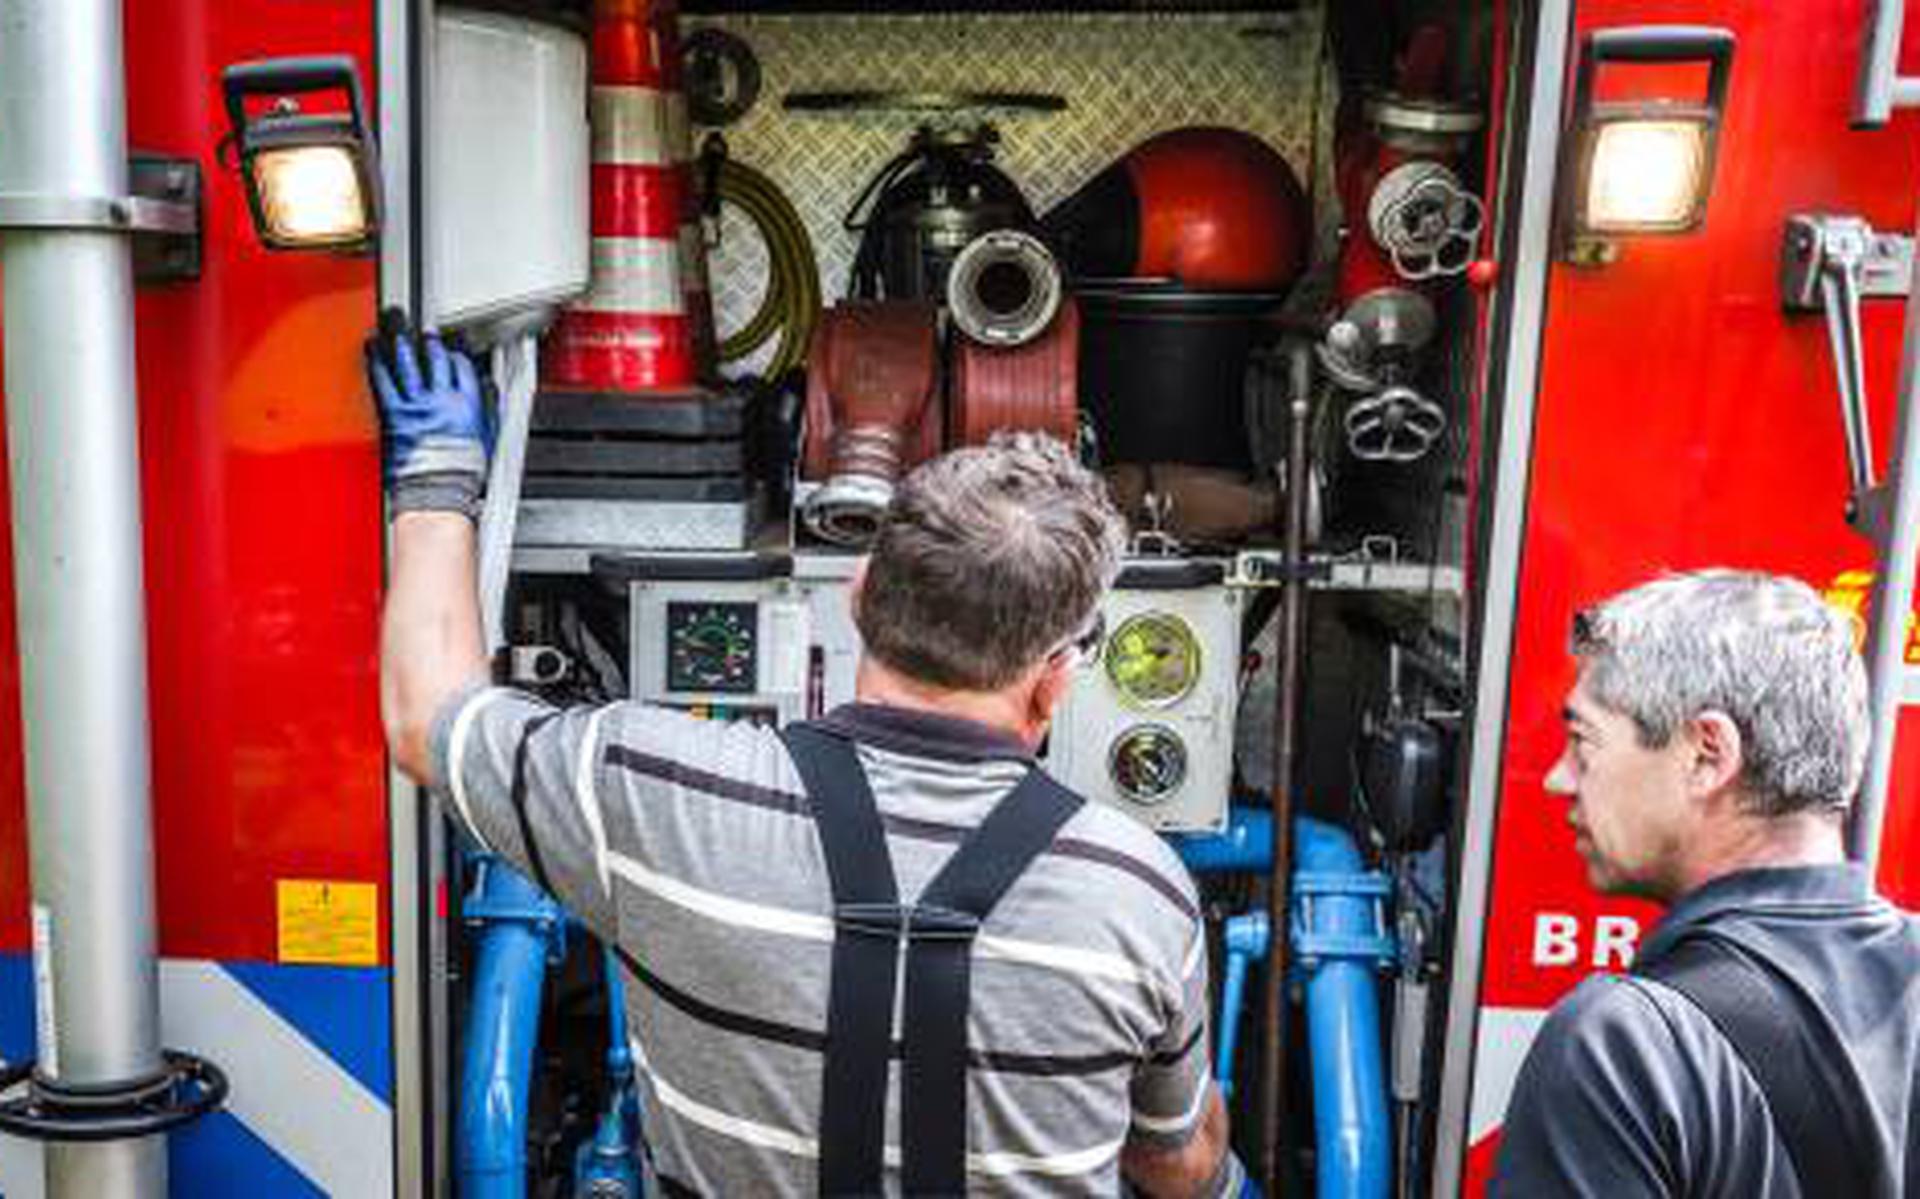 Brandweer Nederland gaat nieuwe werkkleding testen